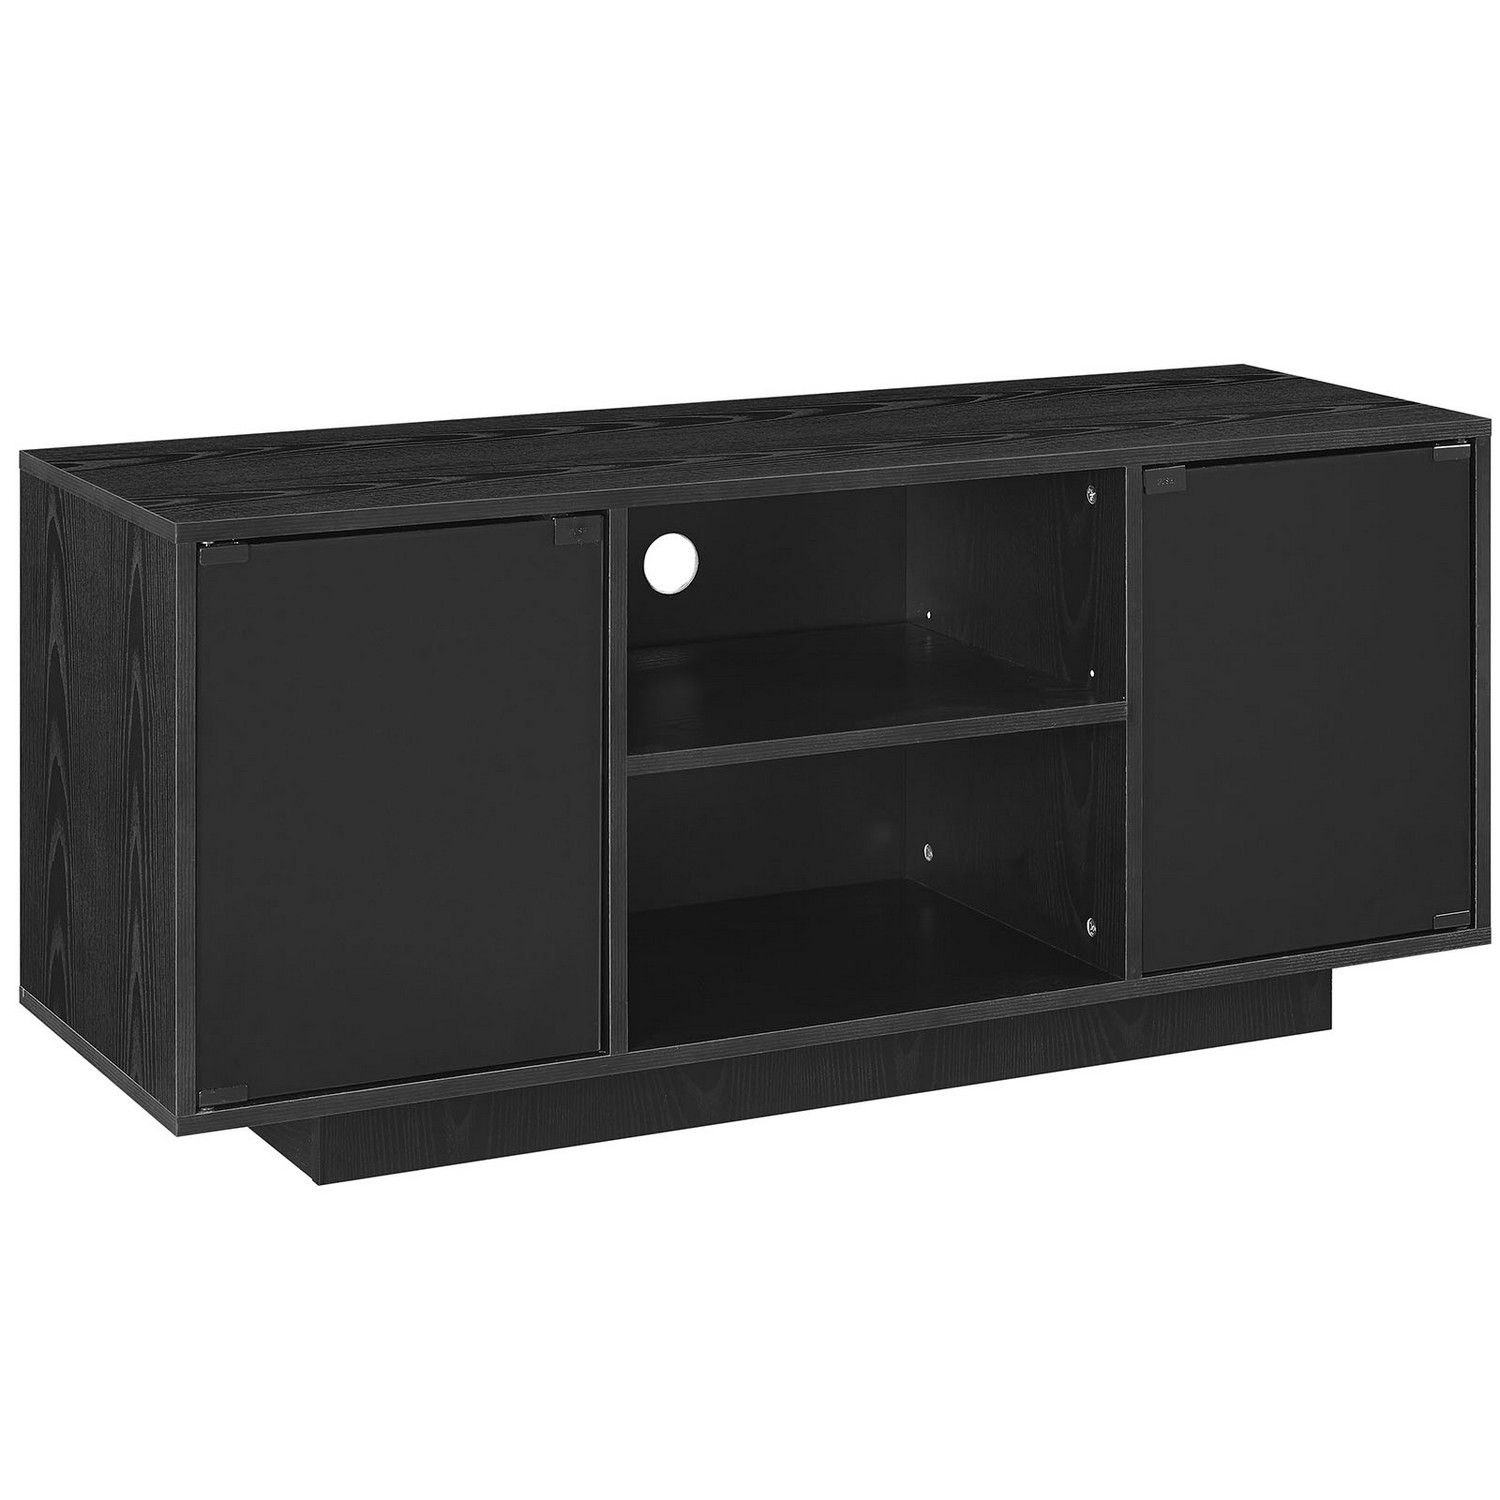 Modway Portal TV Stand - Black